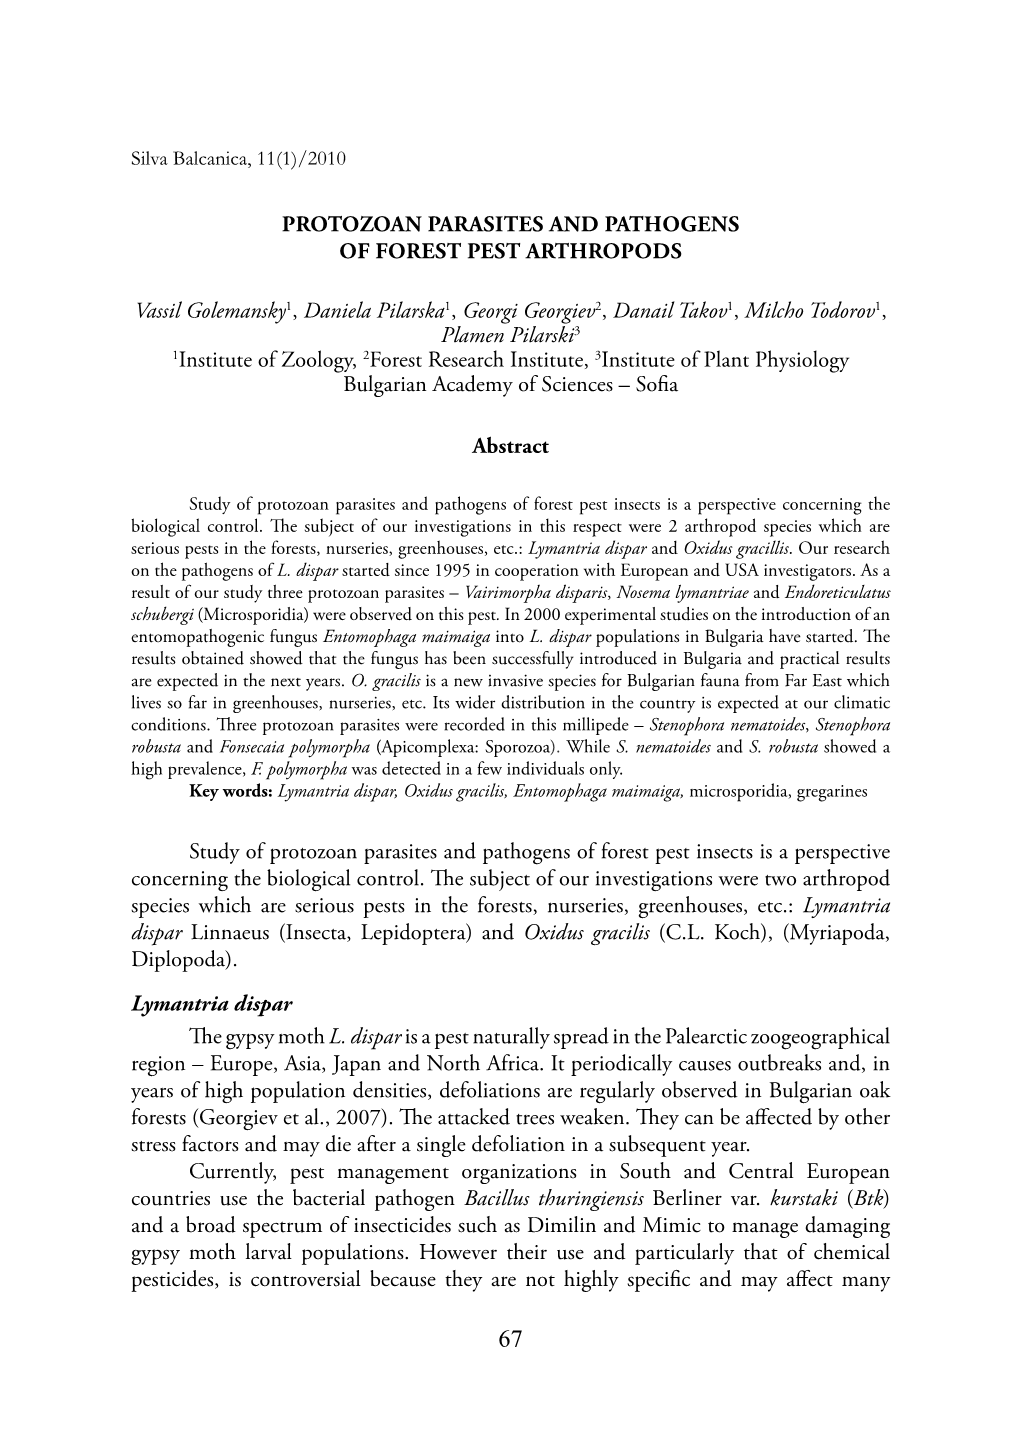 Protozoan Parasites and Pathogens of Forest Pest Arthropods